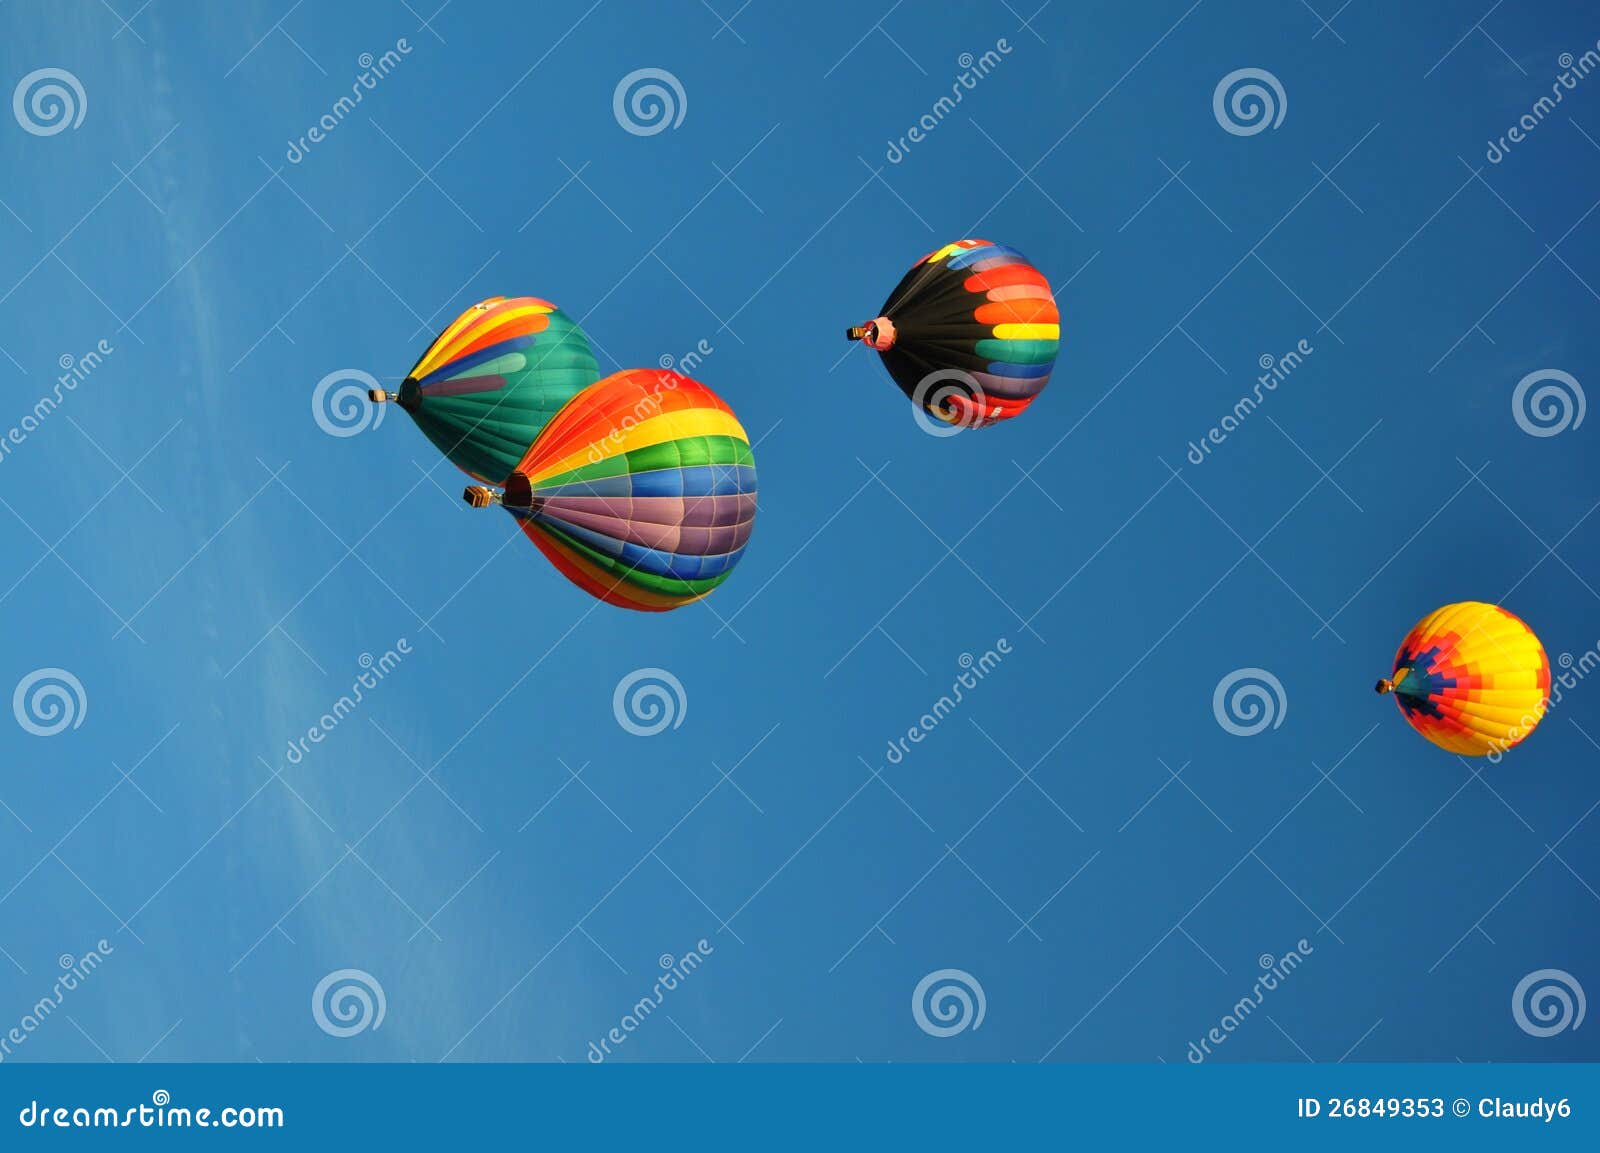 Hot Air Balloons. Colorful Hot air balloon ascending under bright blue skies